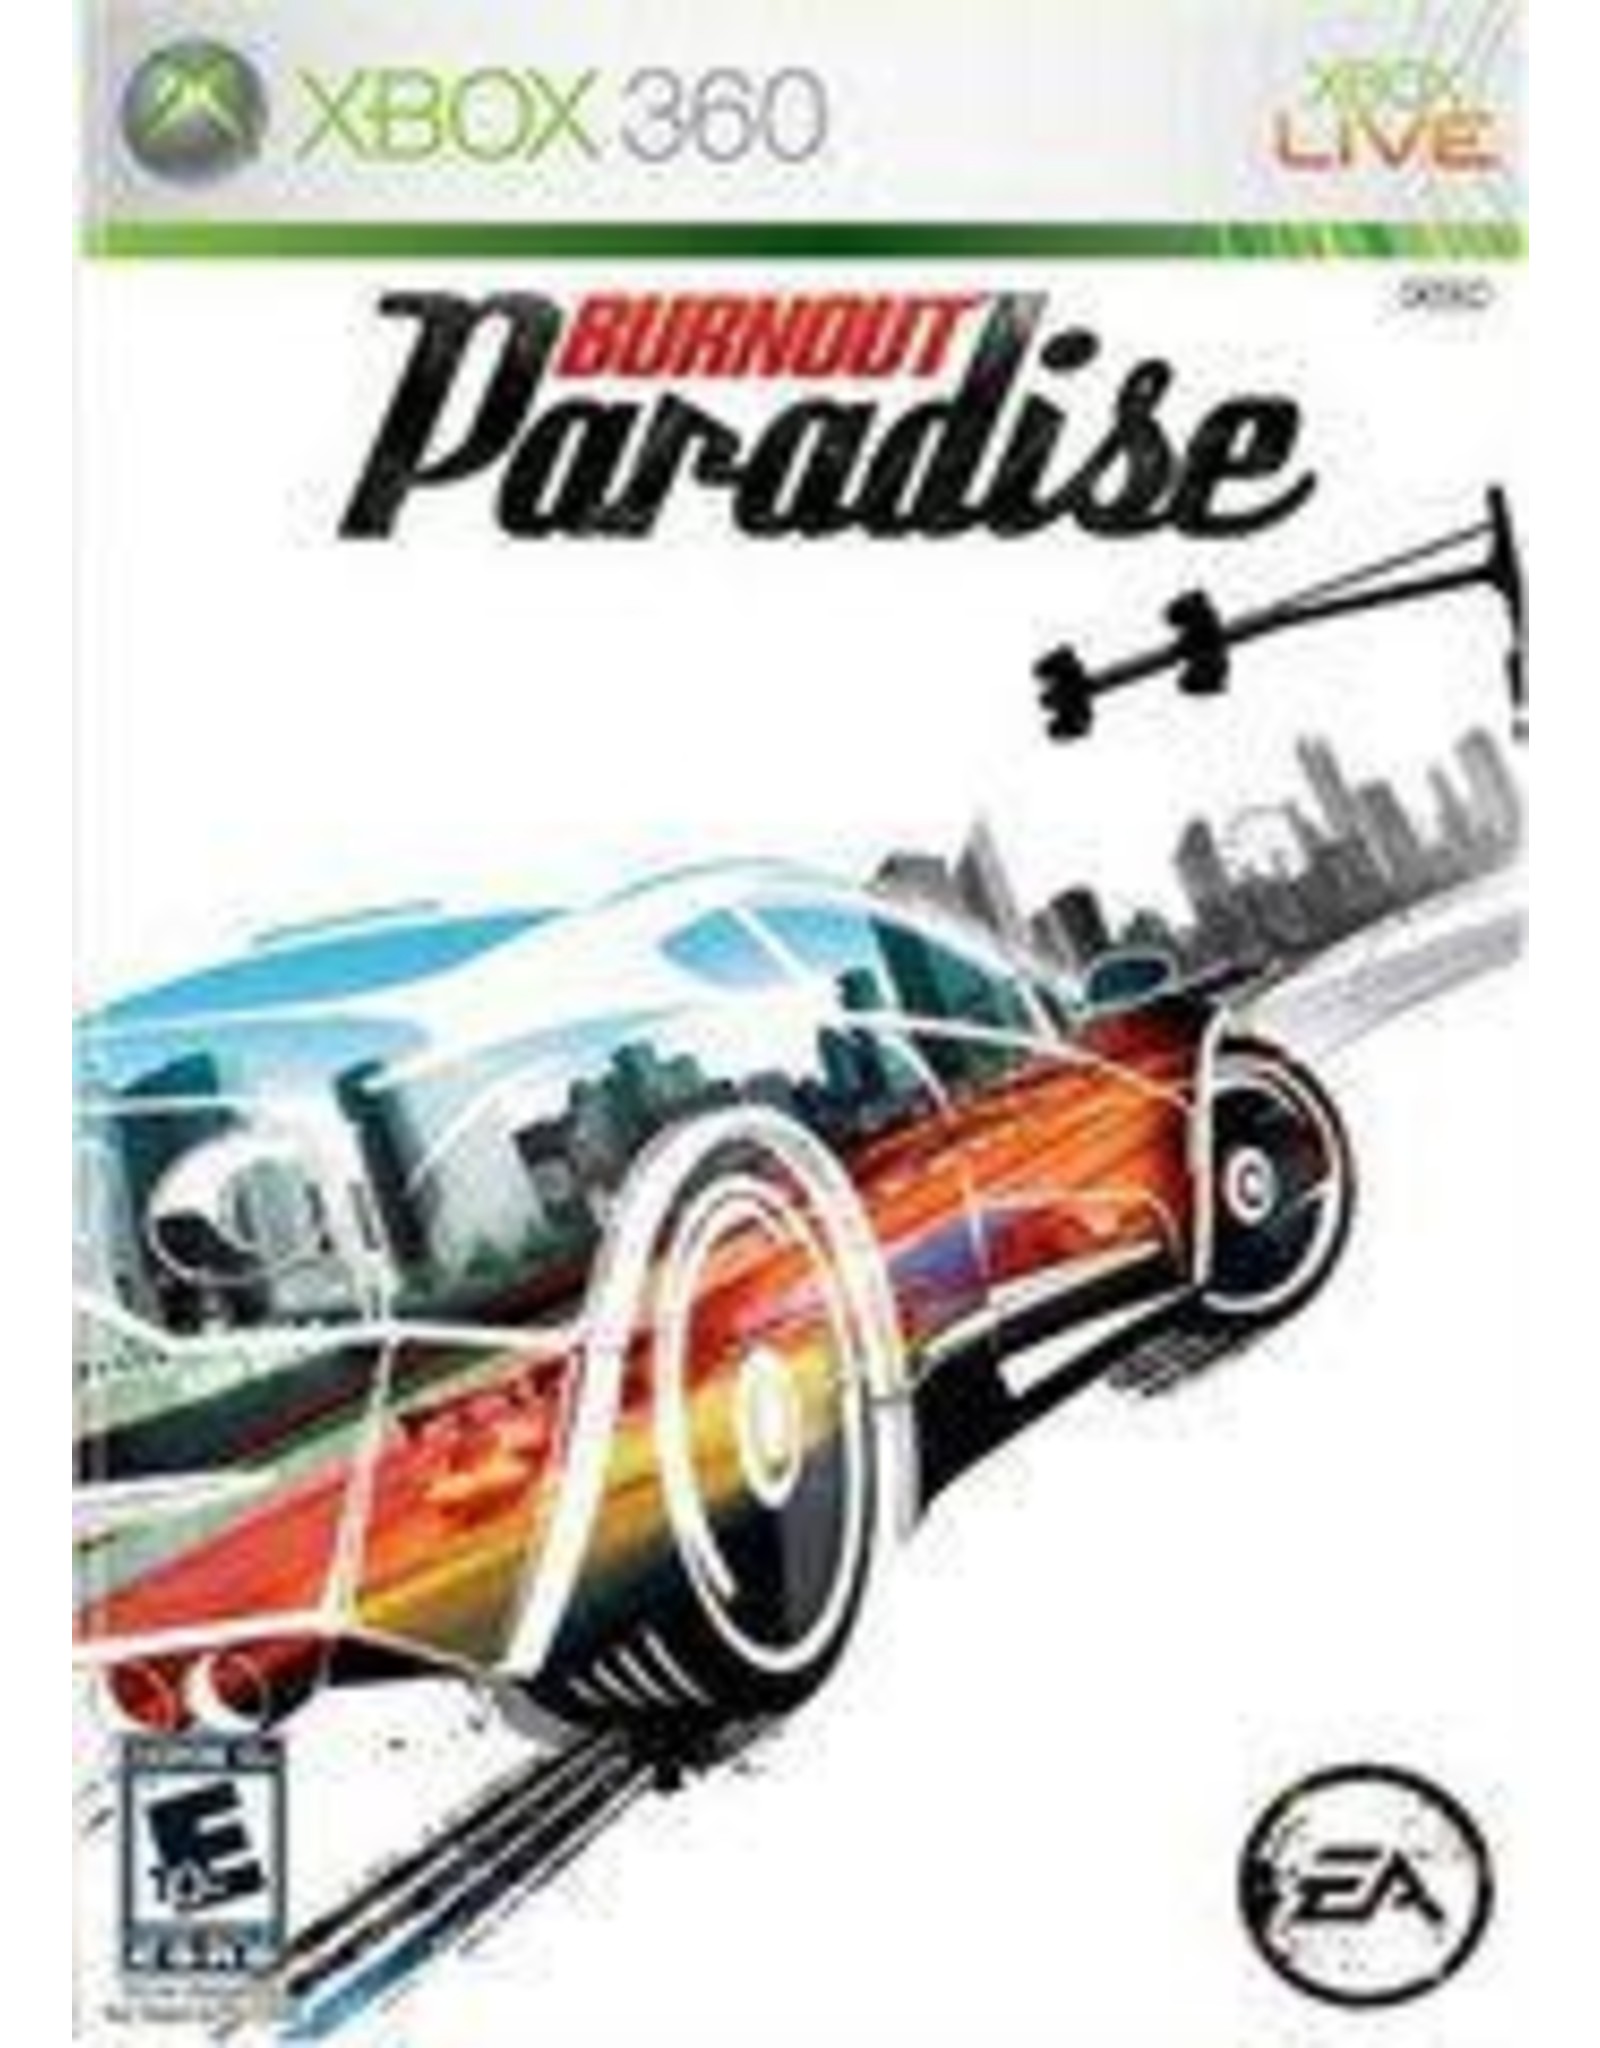 Xbox 360 Burnout Paradise (CiB)